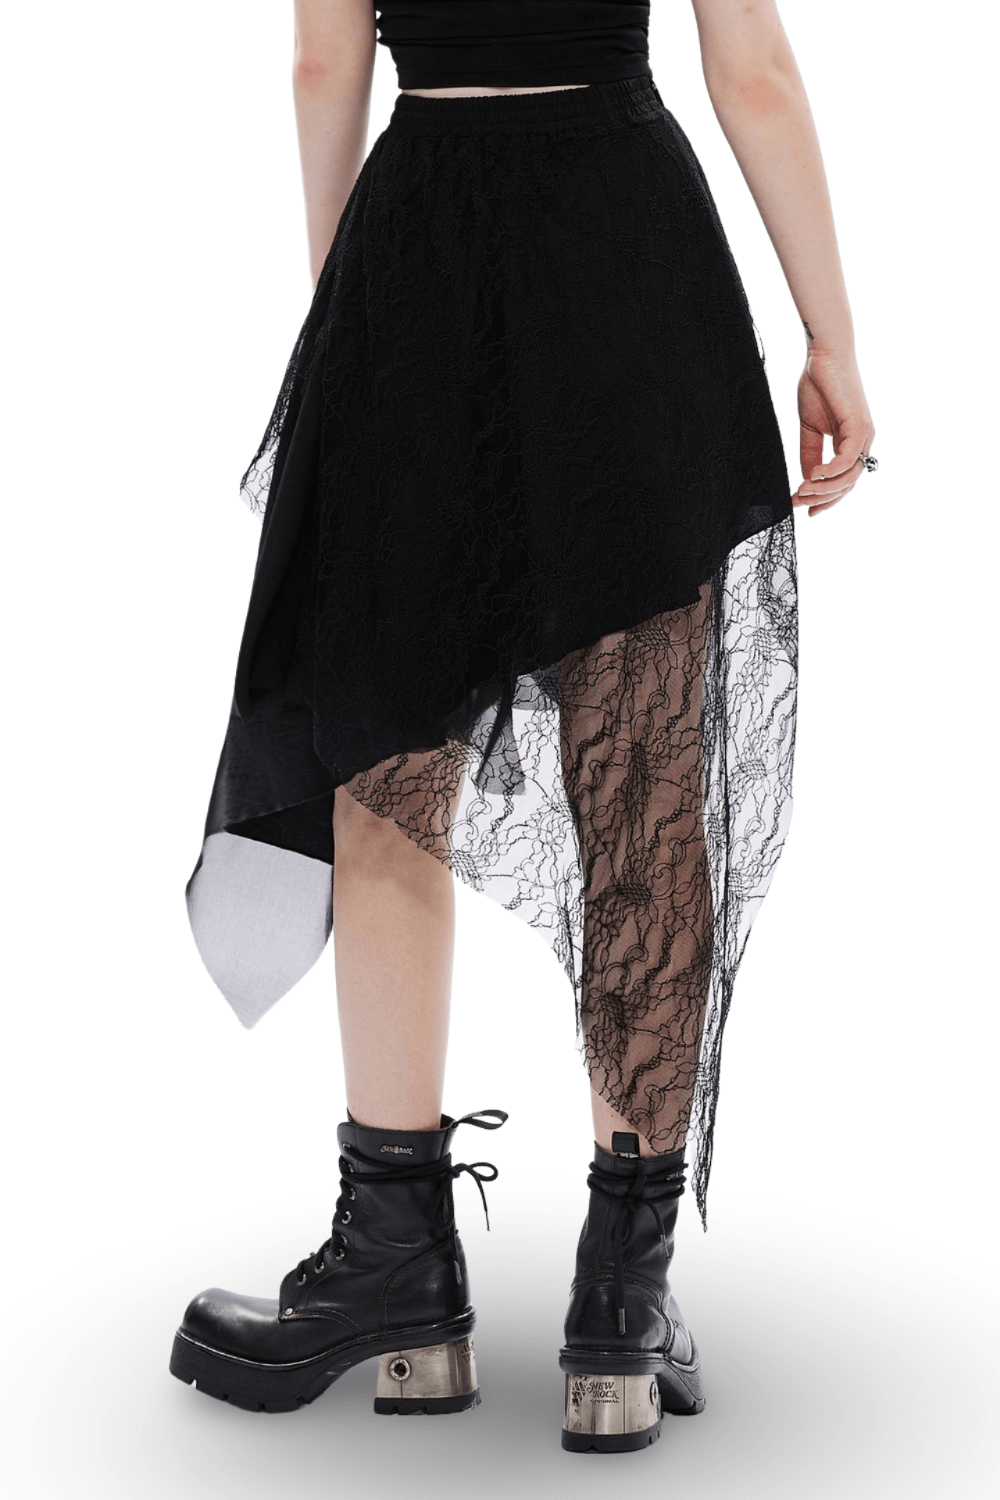 Edgy Black Asymmetric Lace-Trim High-Low Skirt